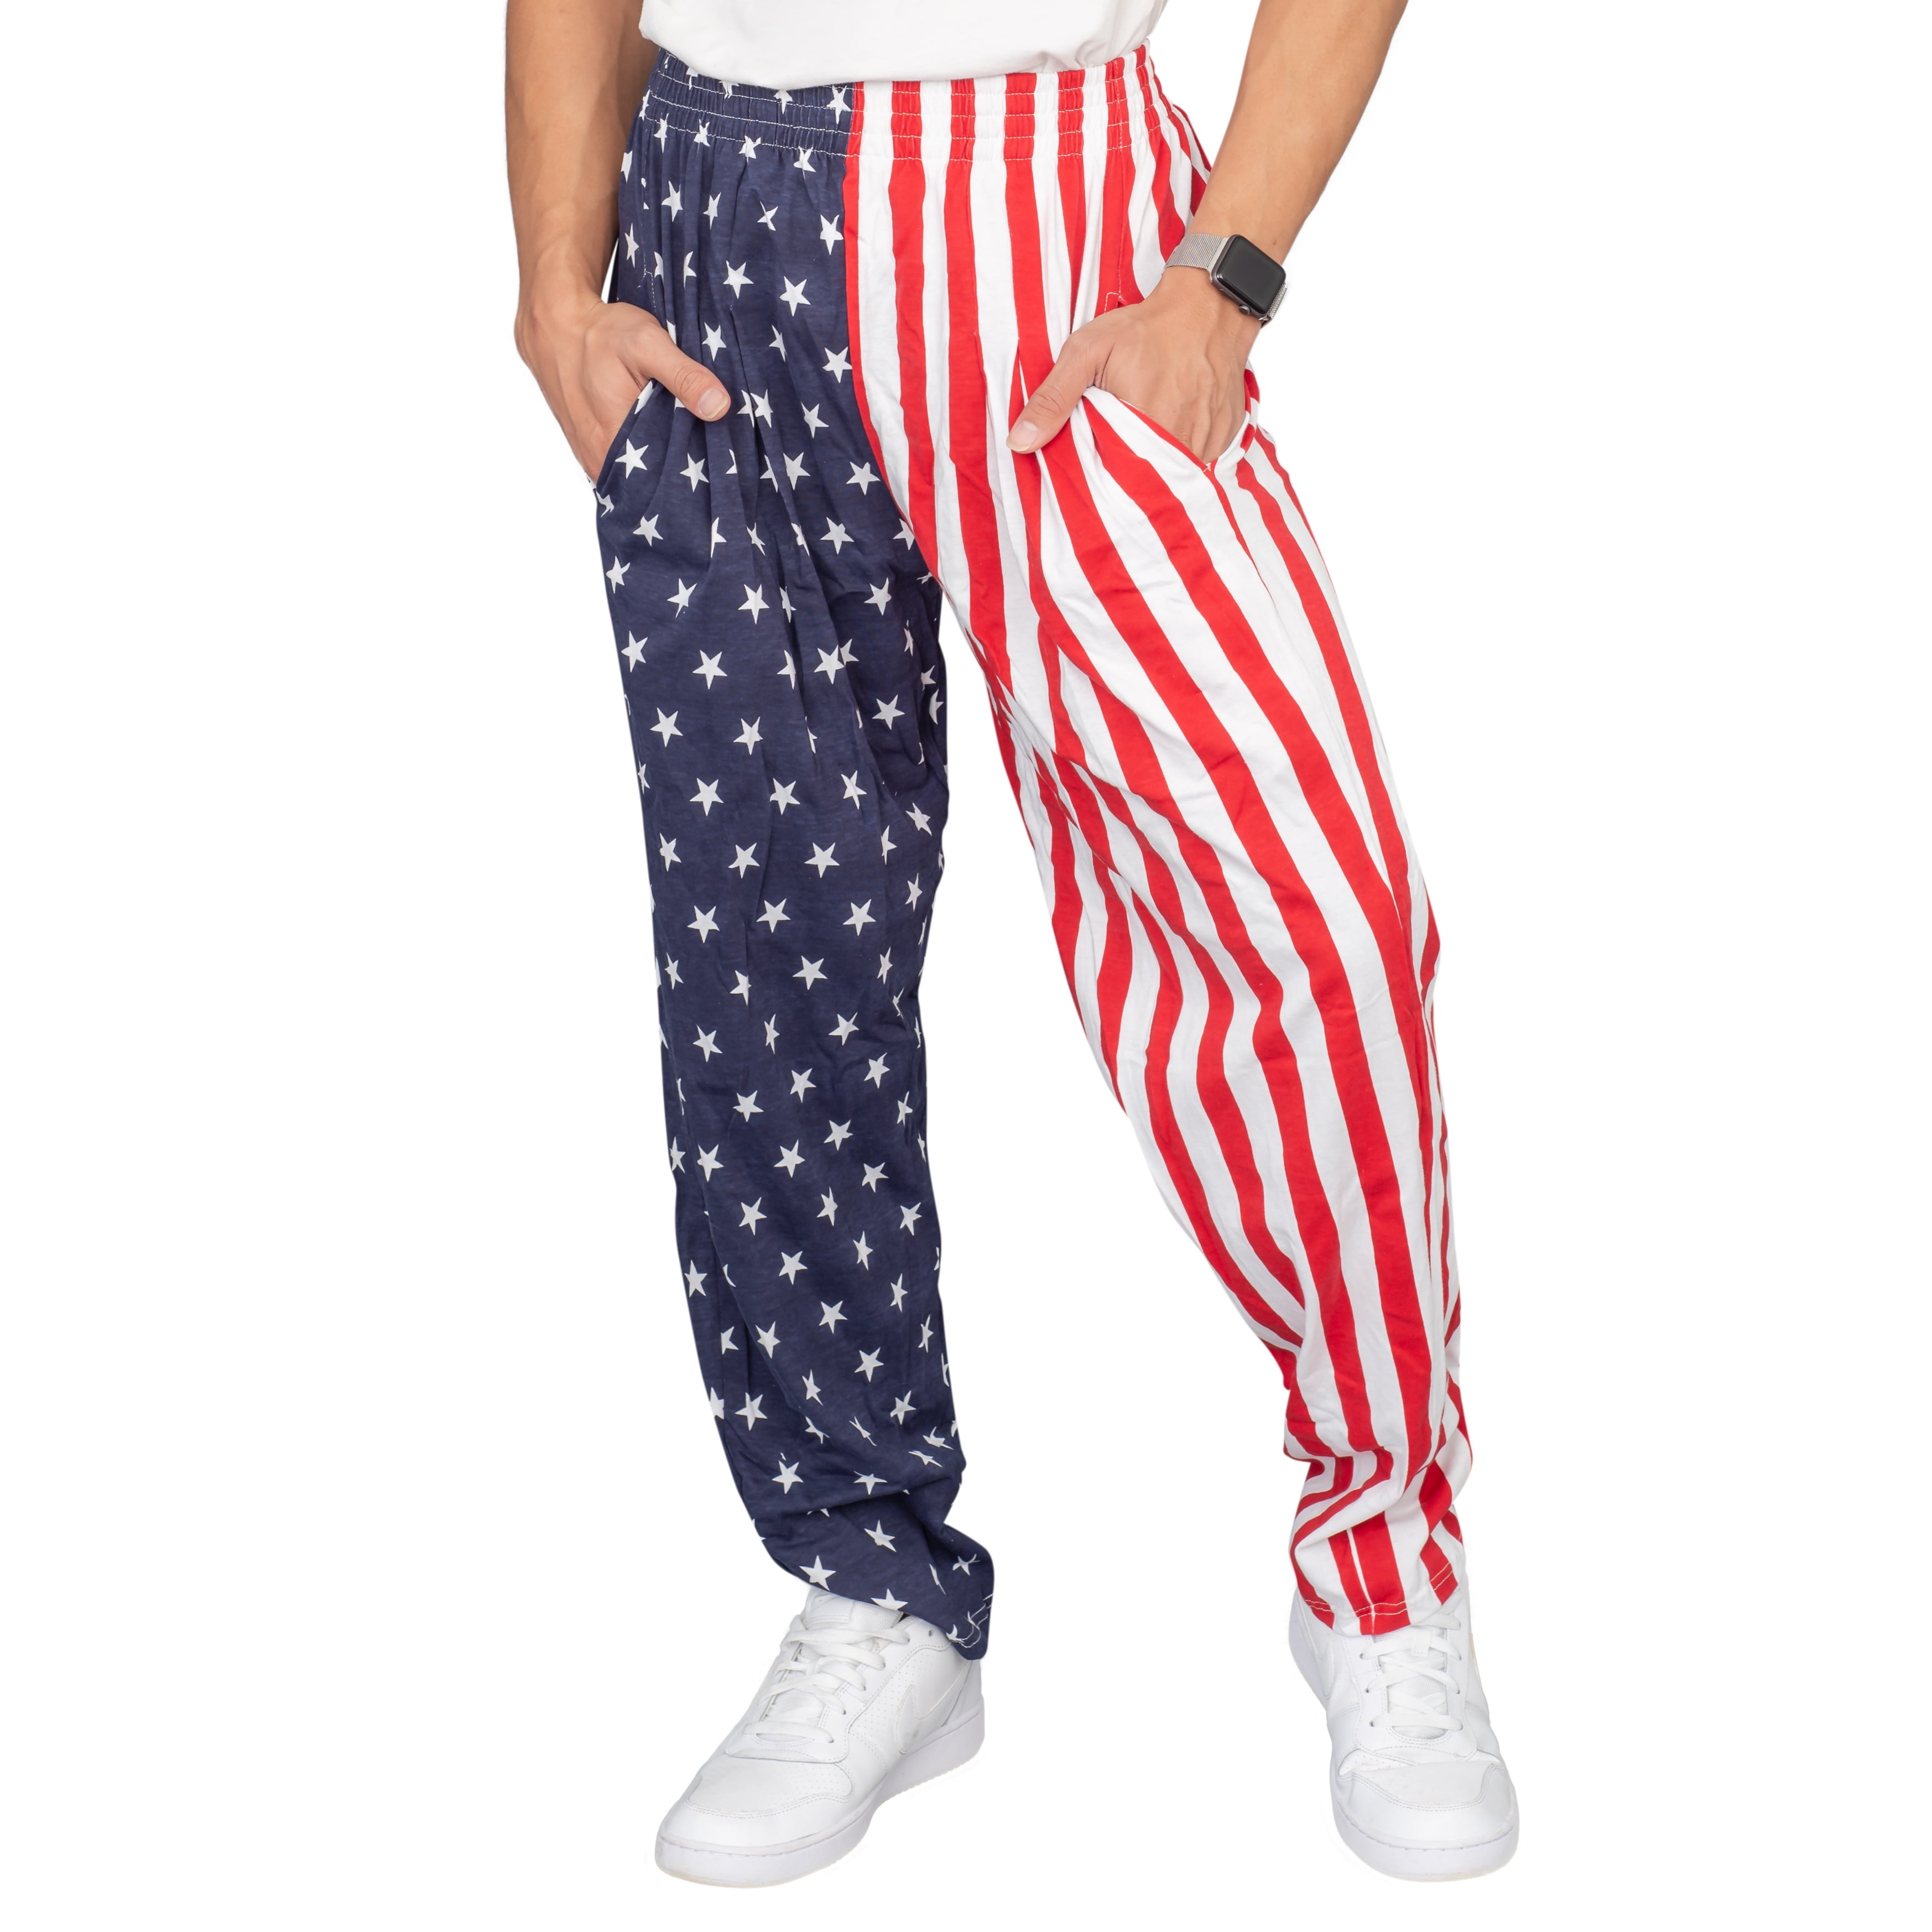 Hochen American Flag Eagl Patterned Mens Flat Angle Pants 